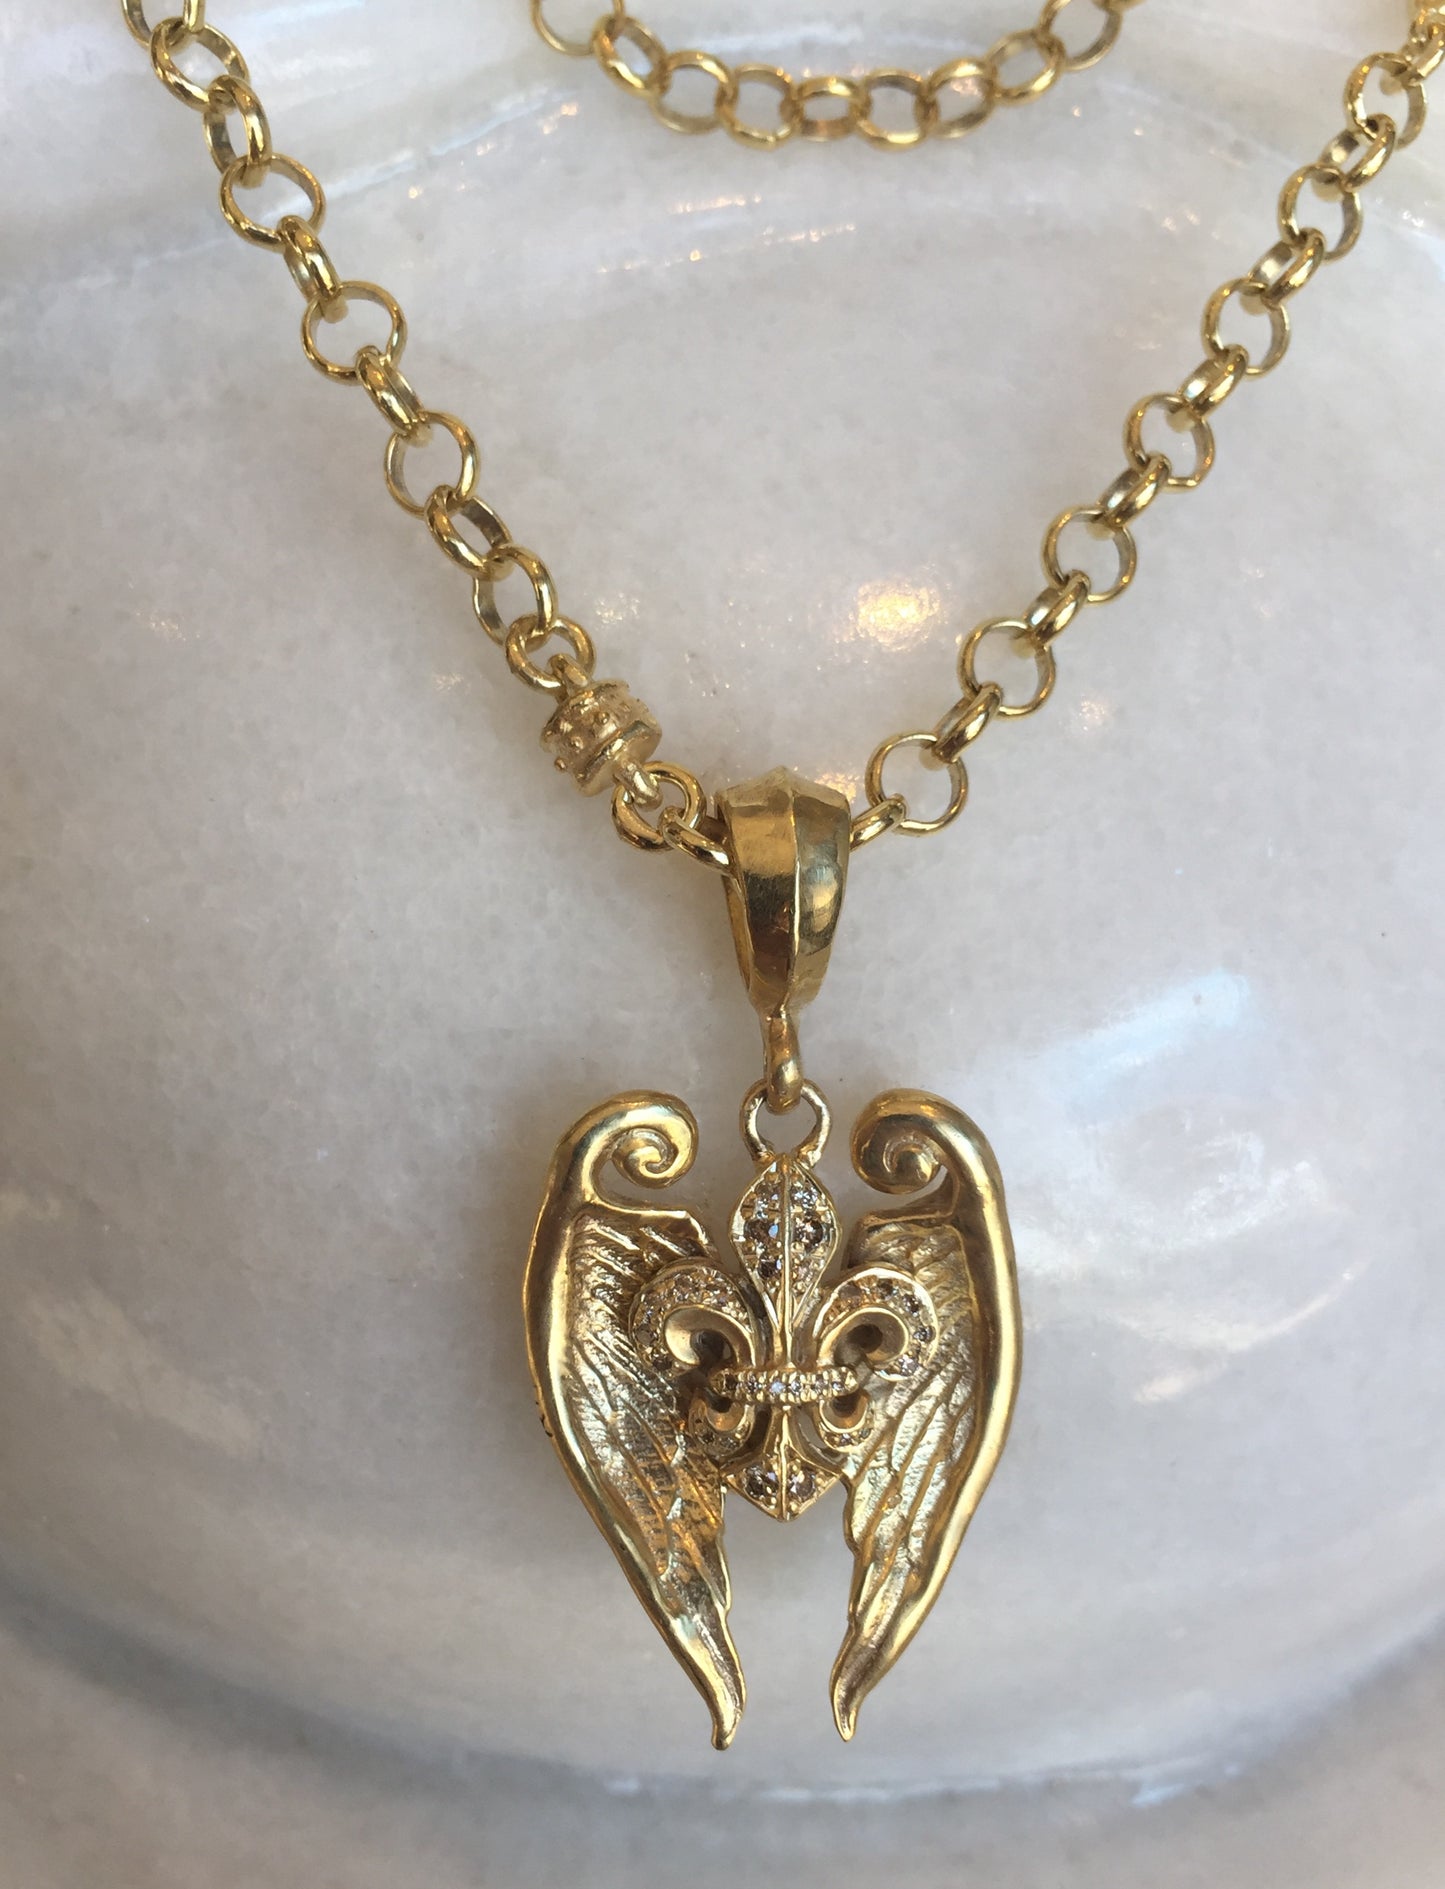 Necklace - Golden Fleur de Lis with Angel Wings in sterling silver by Roman Paul